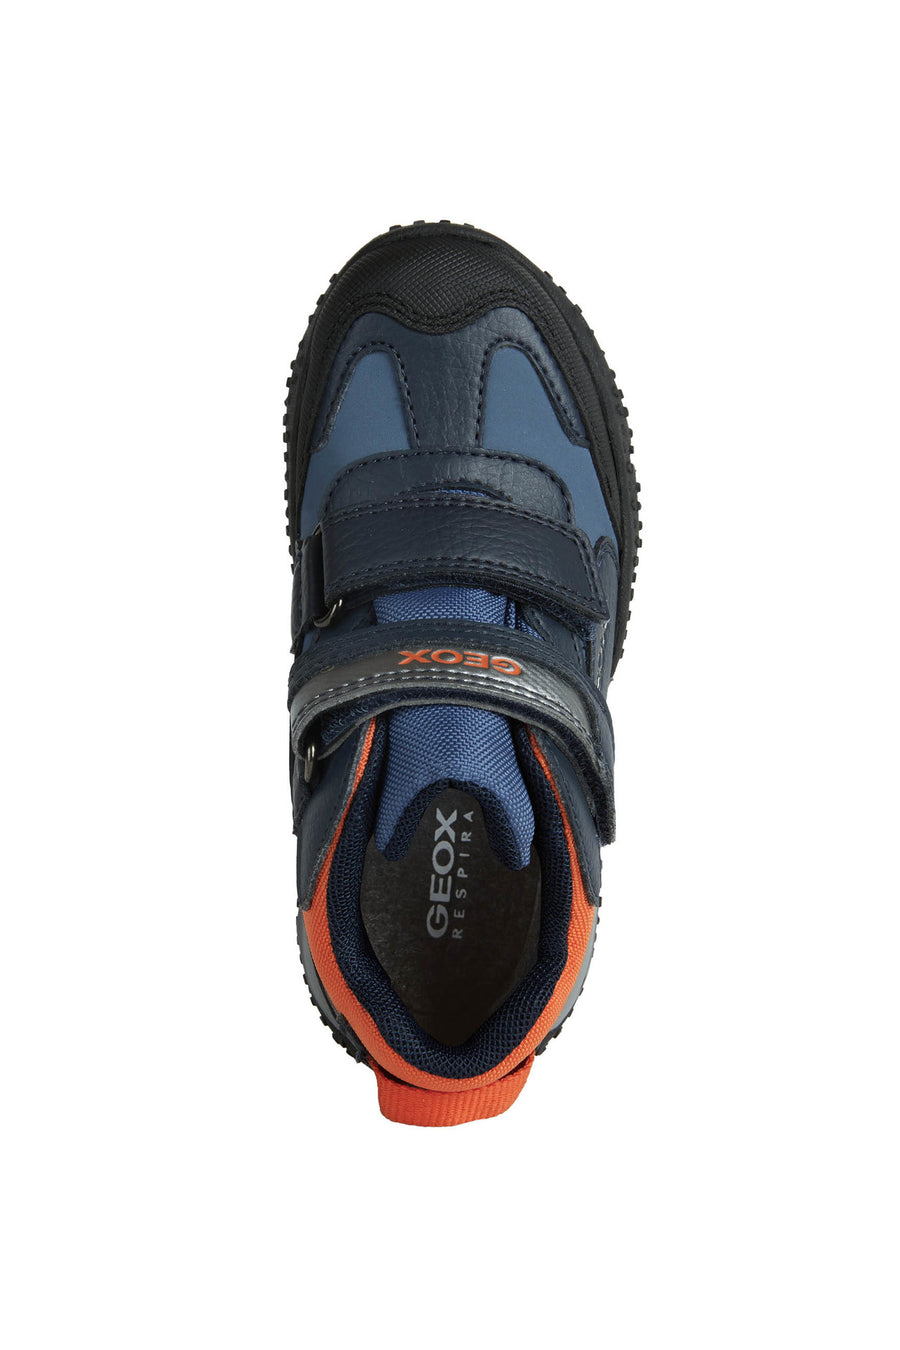 Geox Baltic | Velcro Trainers Boots | Navy & Orange